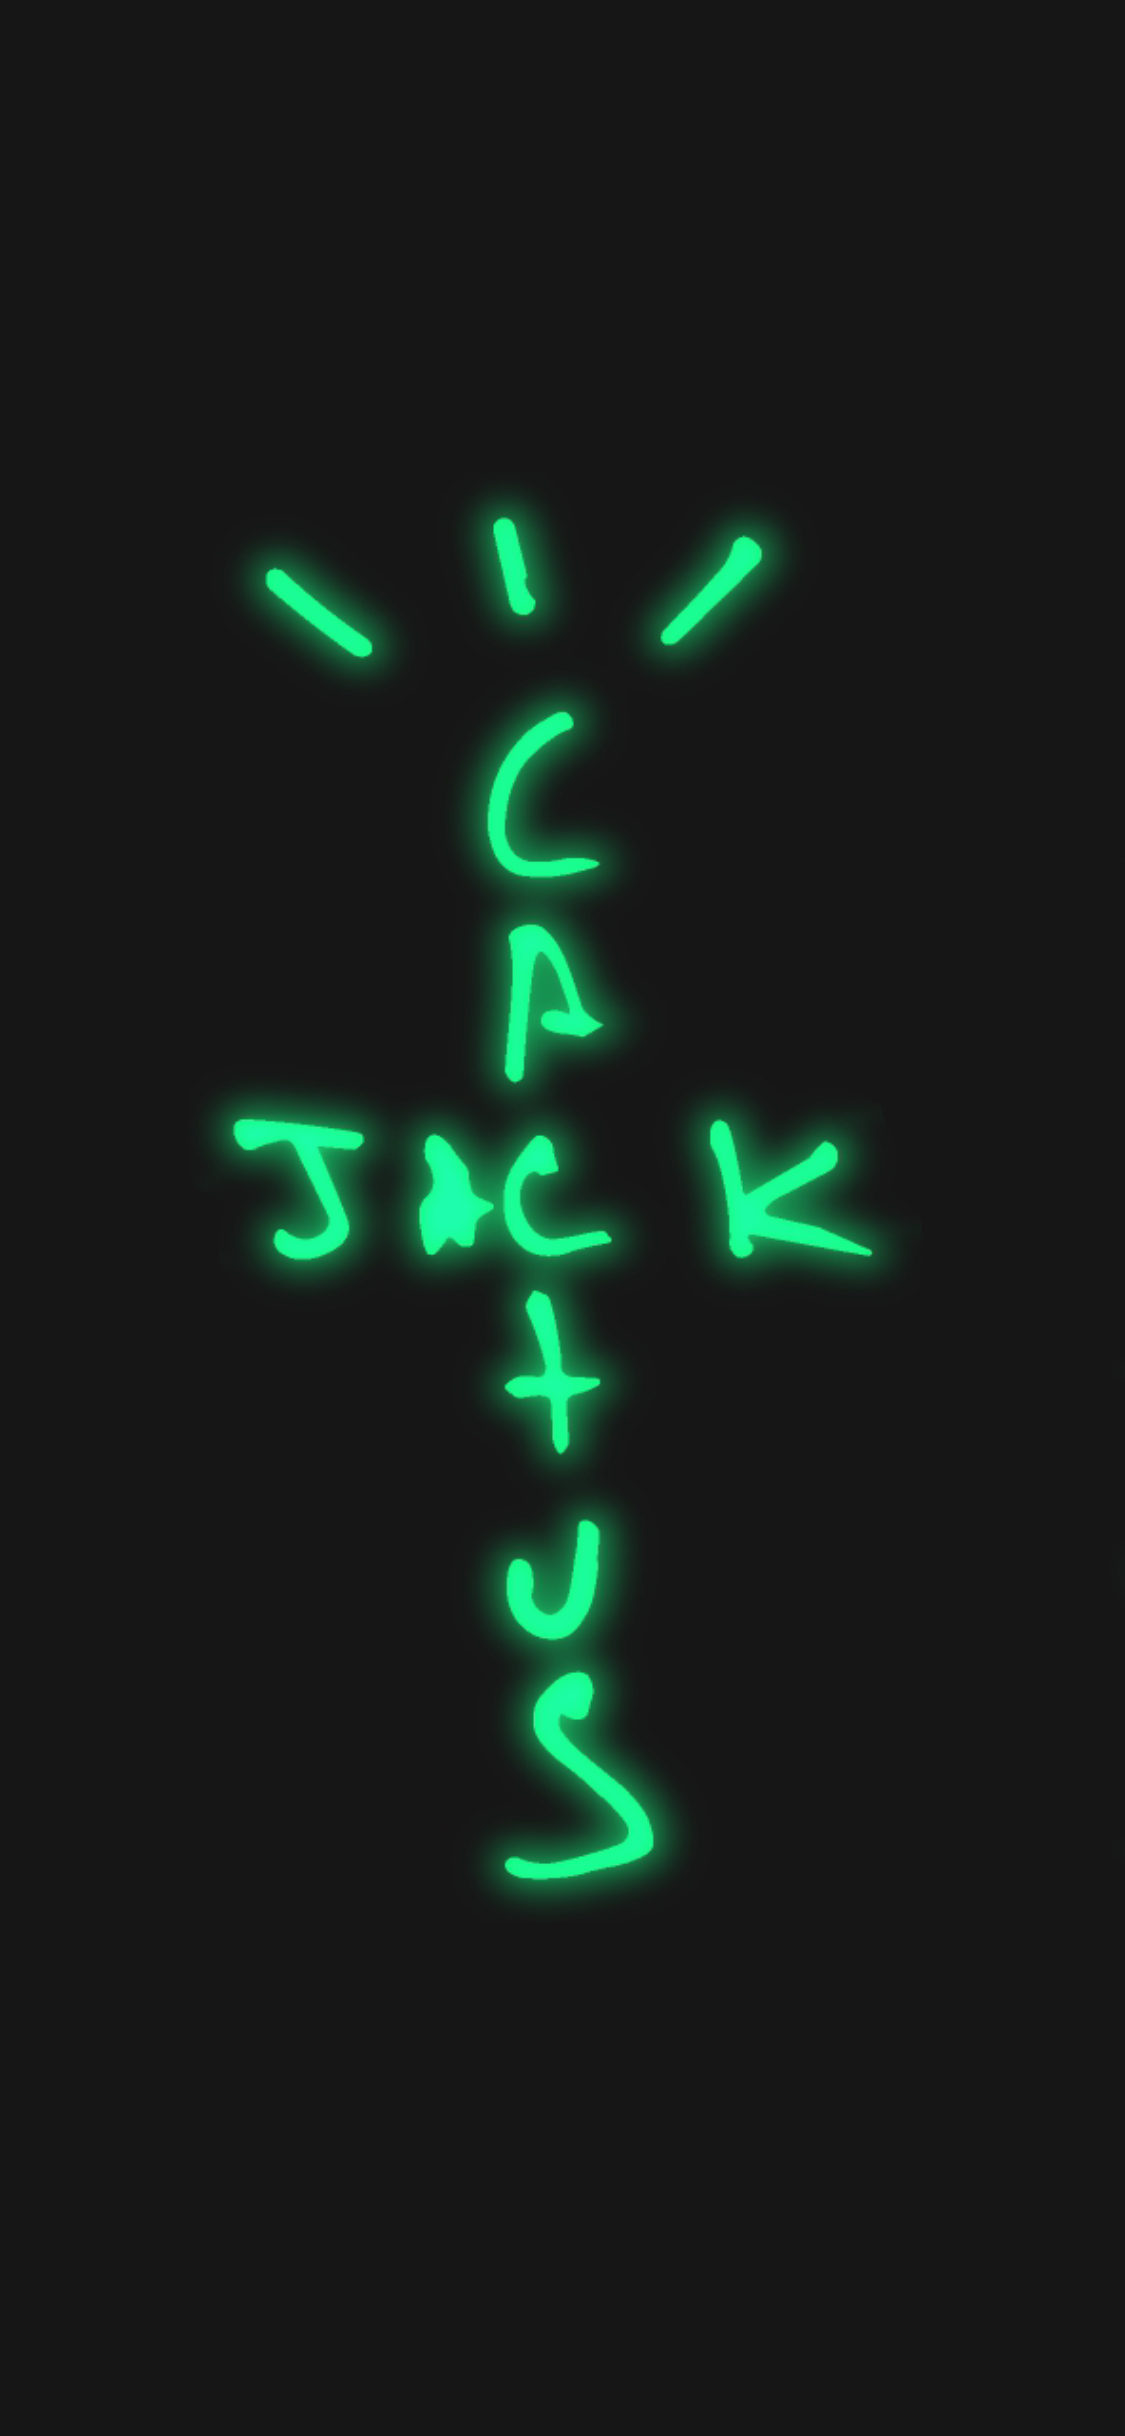 Cactus Jack wallpaper by k3nnydesigns  Download on ZEDGE  33fd